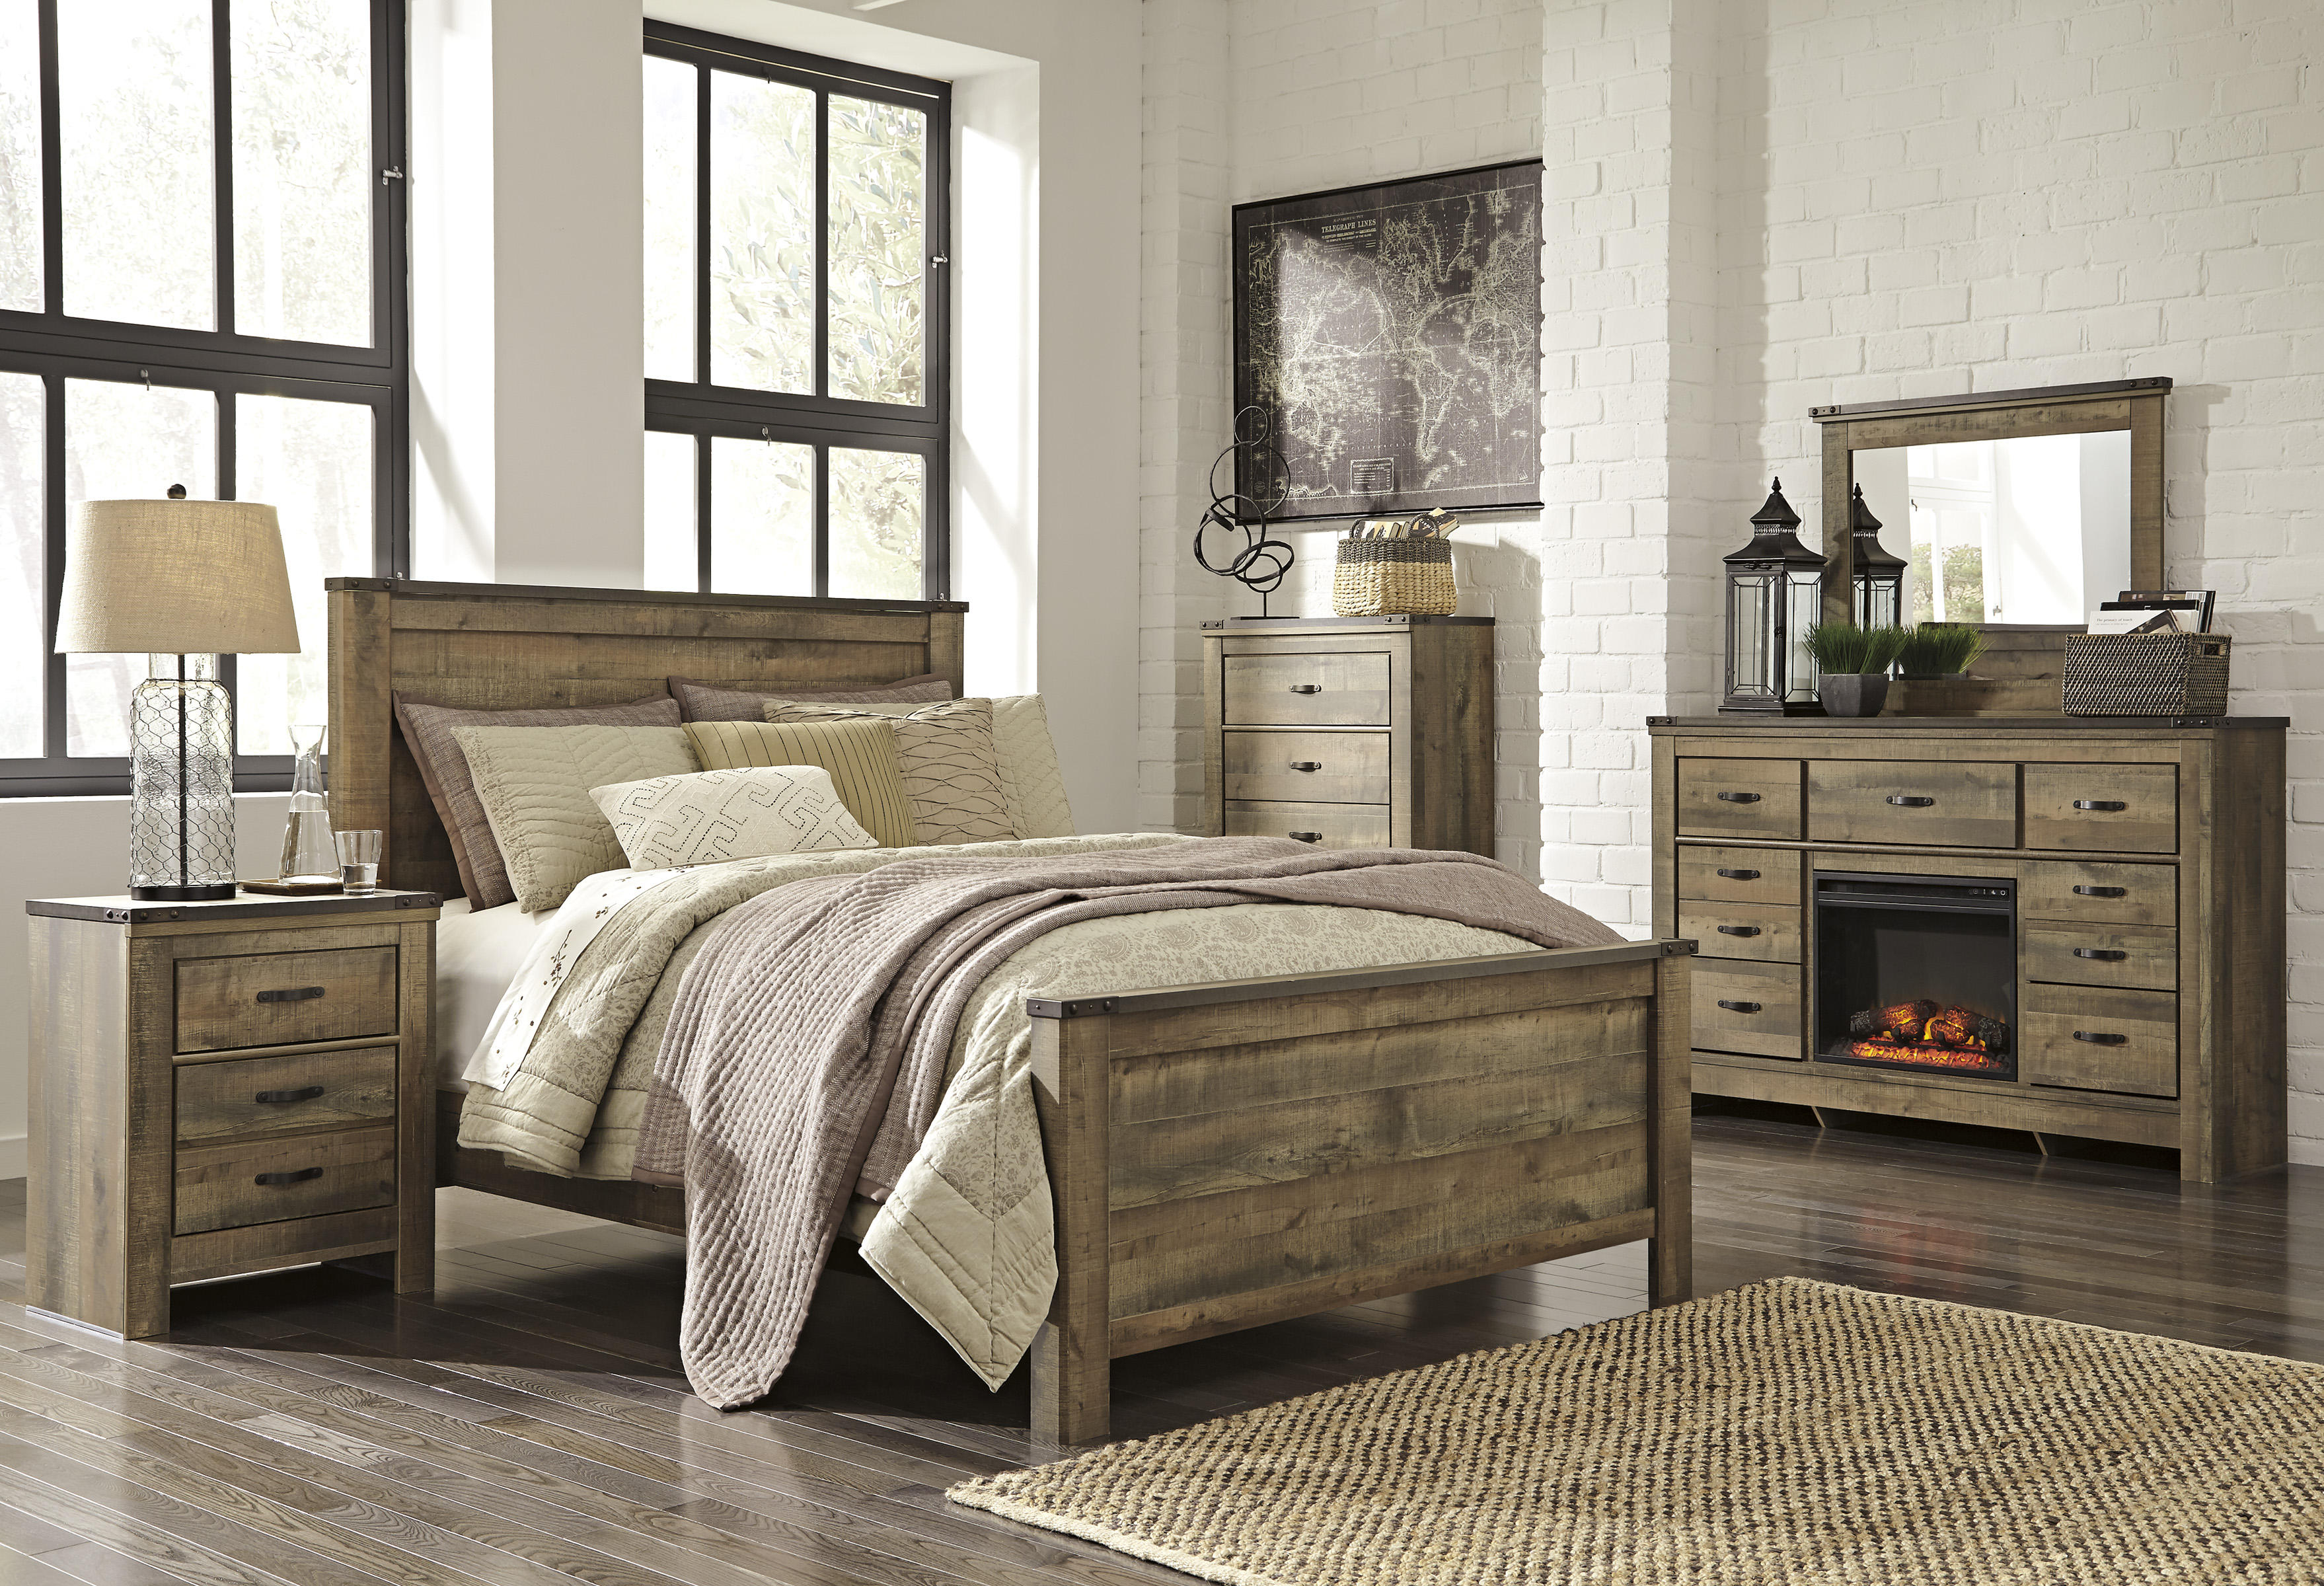 barnwood bedroom furniture plans